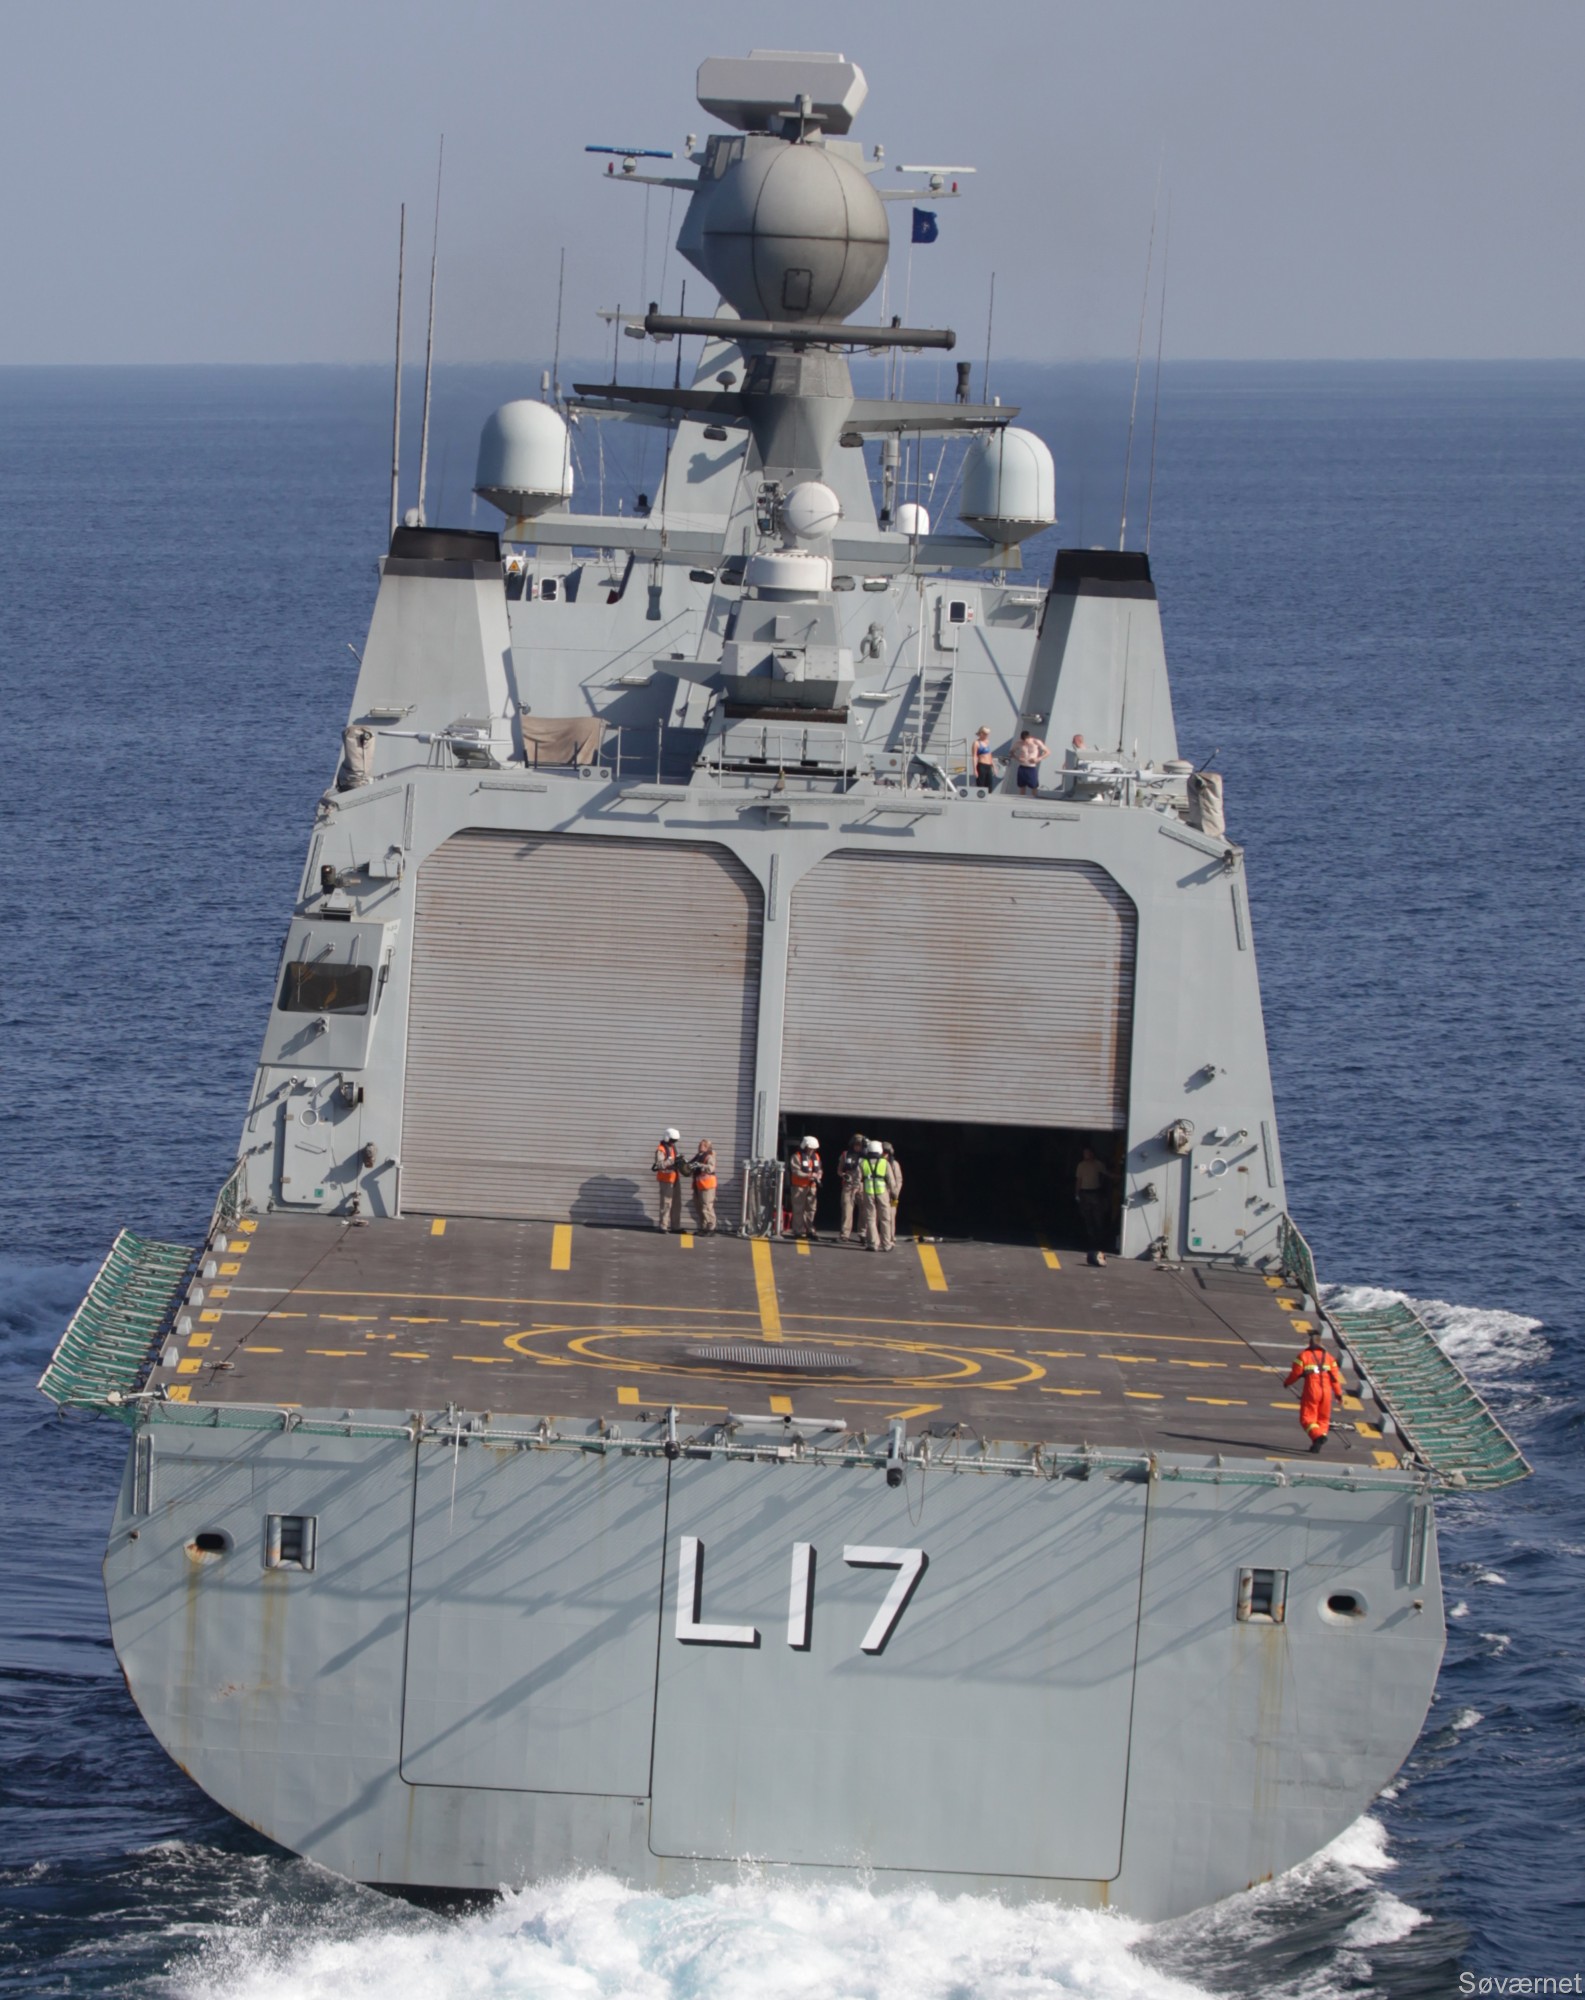 f-342 hdms esbern snare l-17 frigate command support ship royal danish navy 49